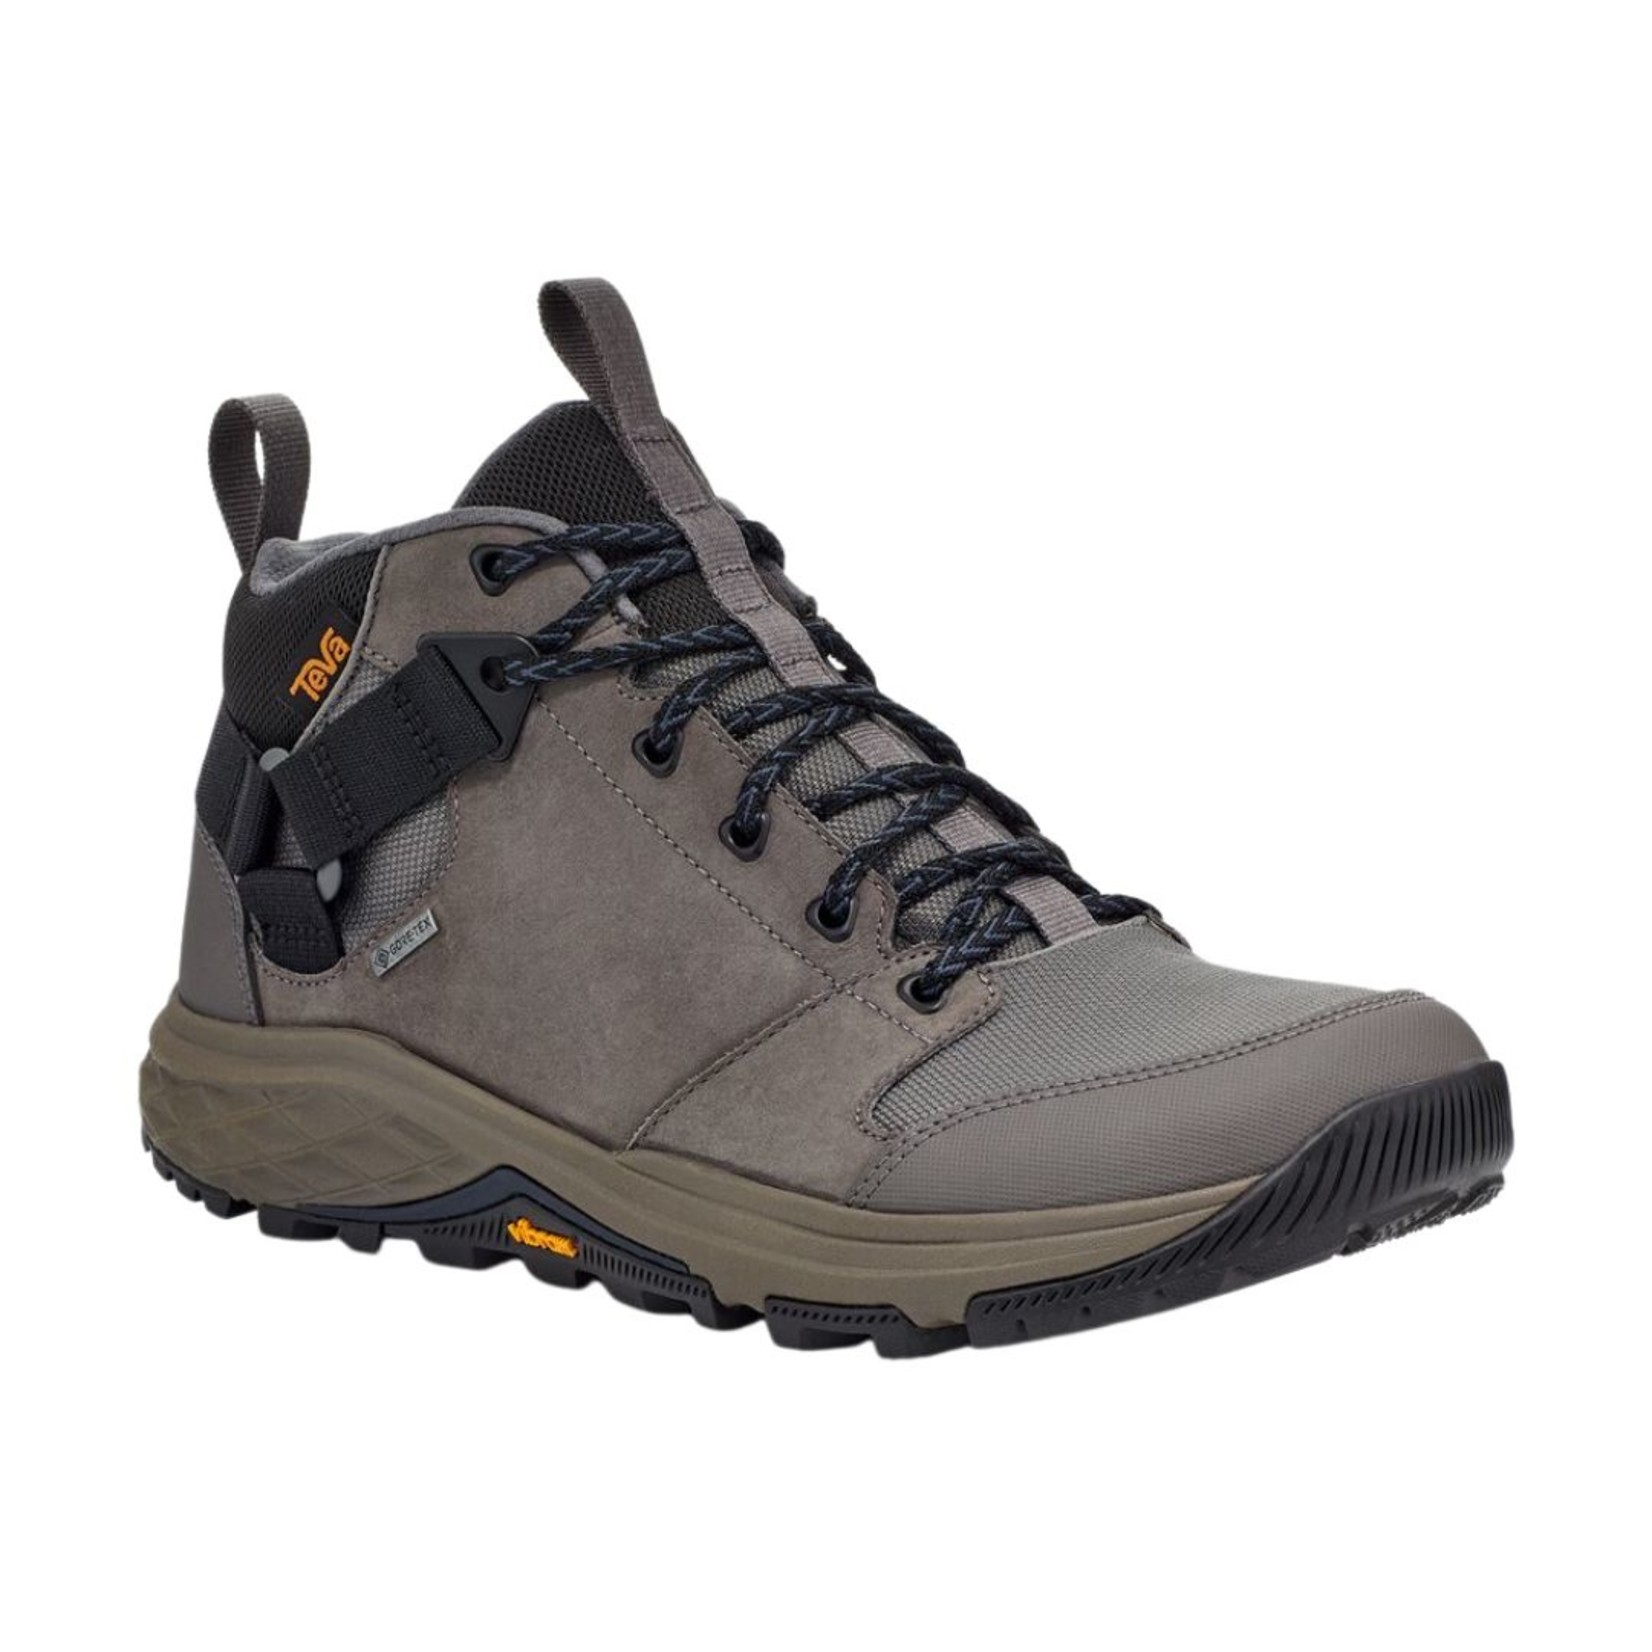 Teva Grandview GTX Men’s Hiking Boots - Shippy Shoes